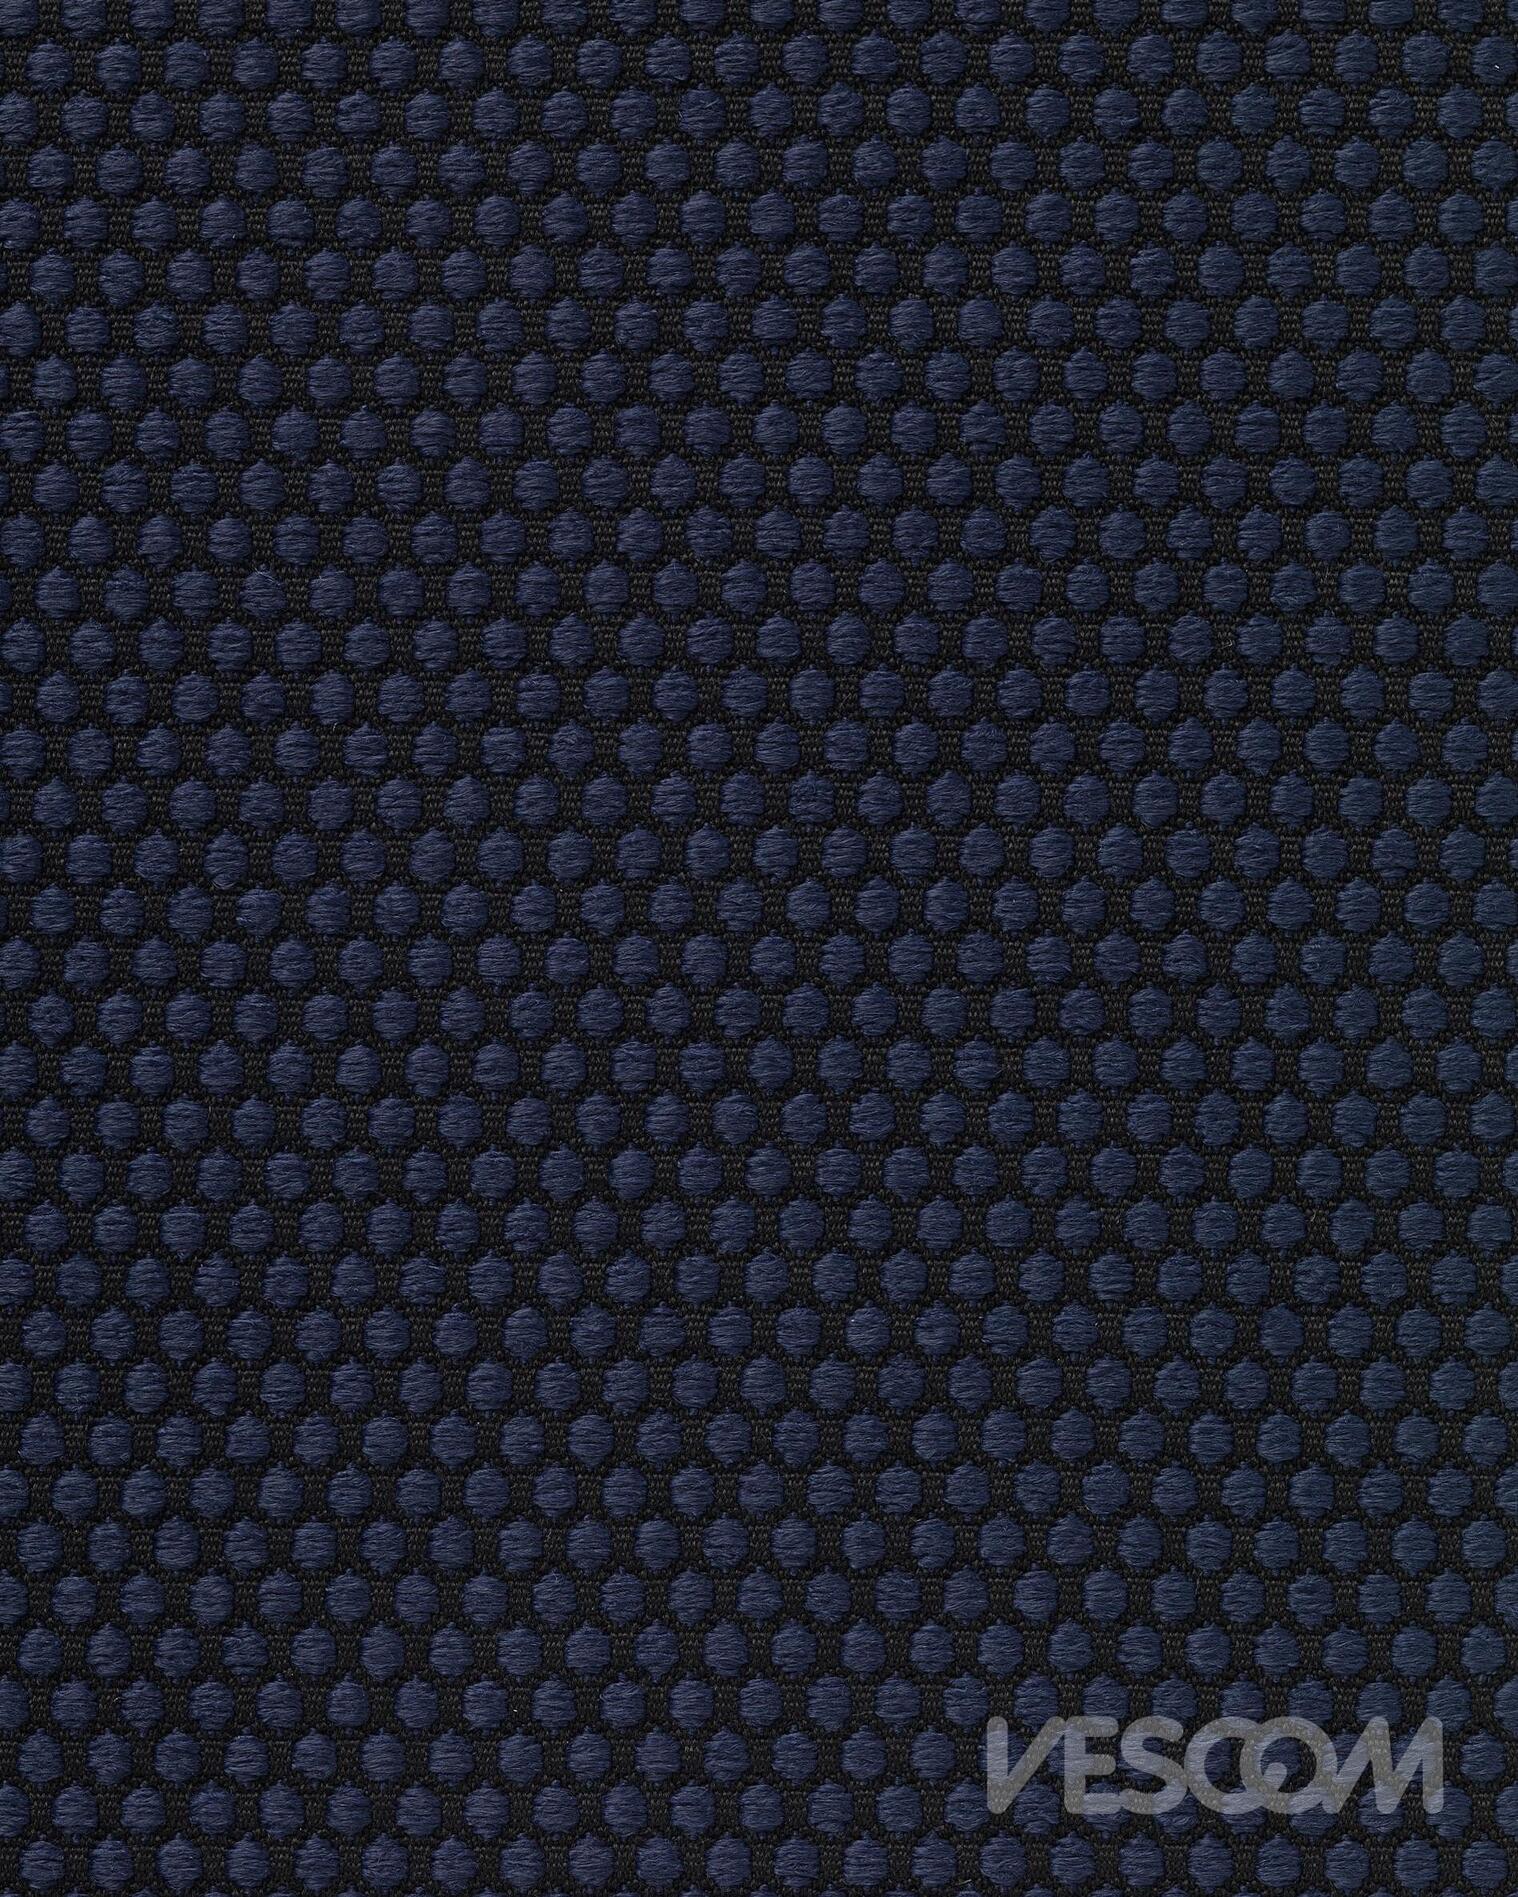 vescom-rolla-upholstery-fabric-7065-06